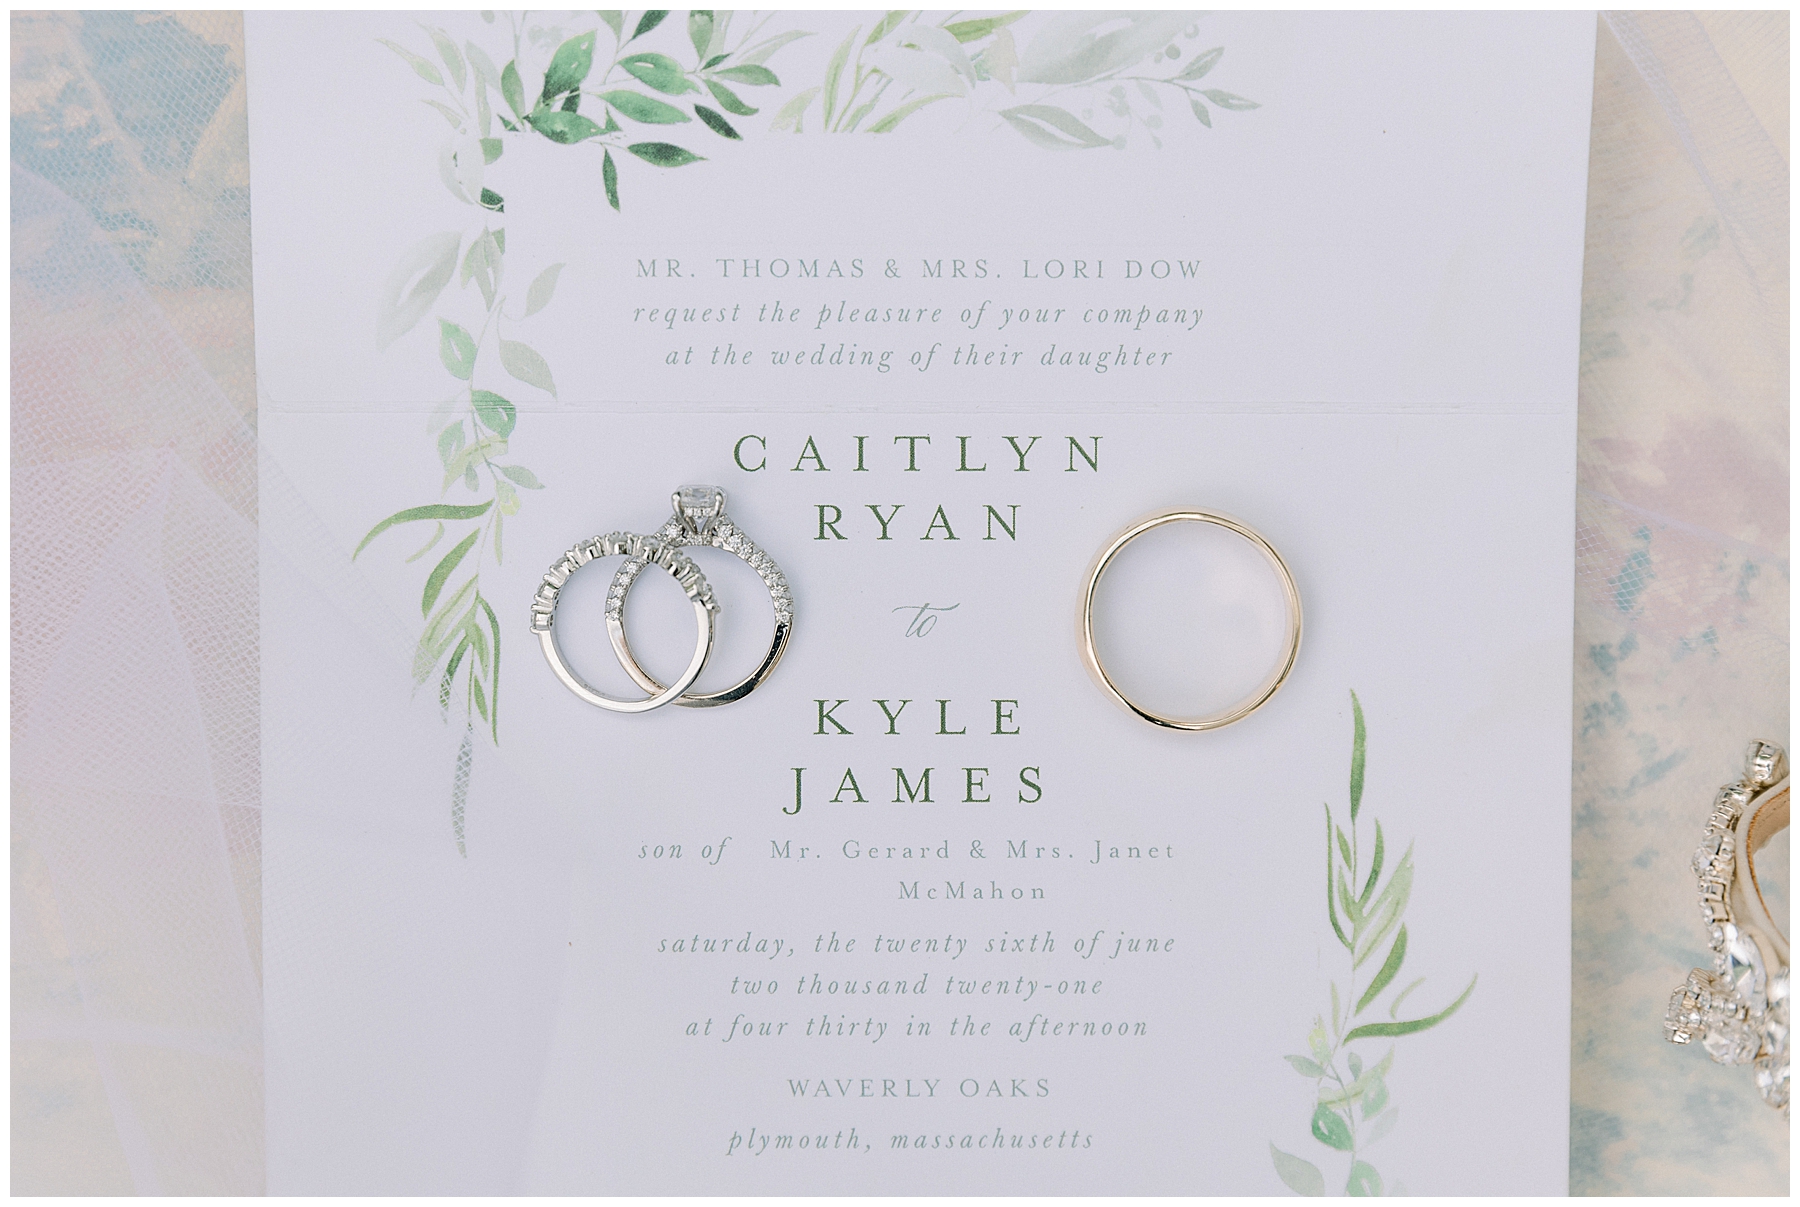 Waverly Oaks Golf Club Wedding invitations and rings